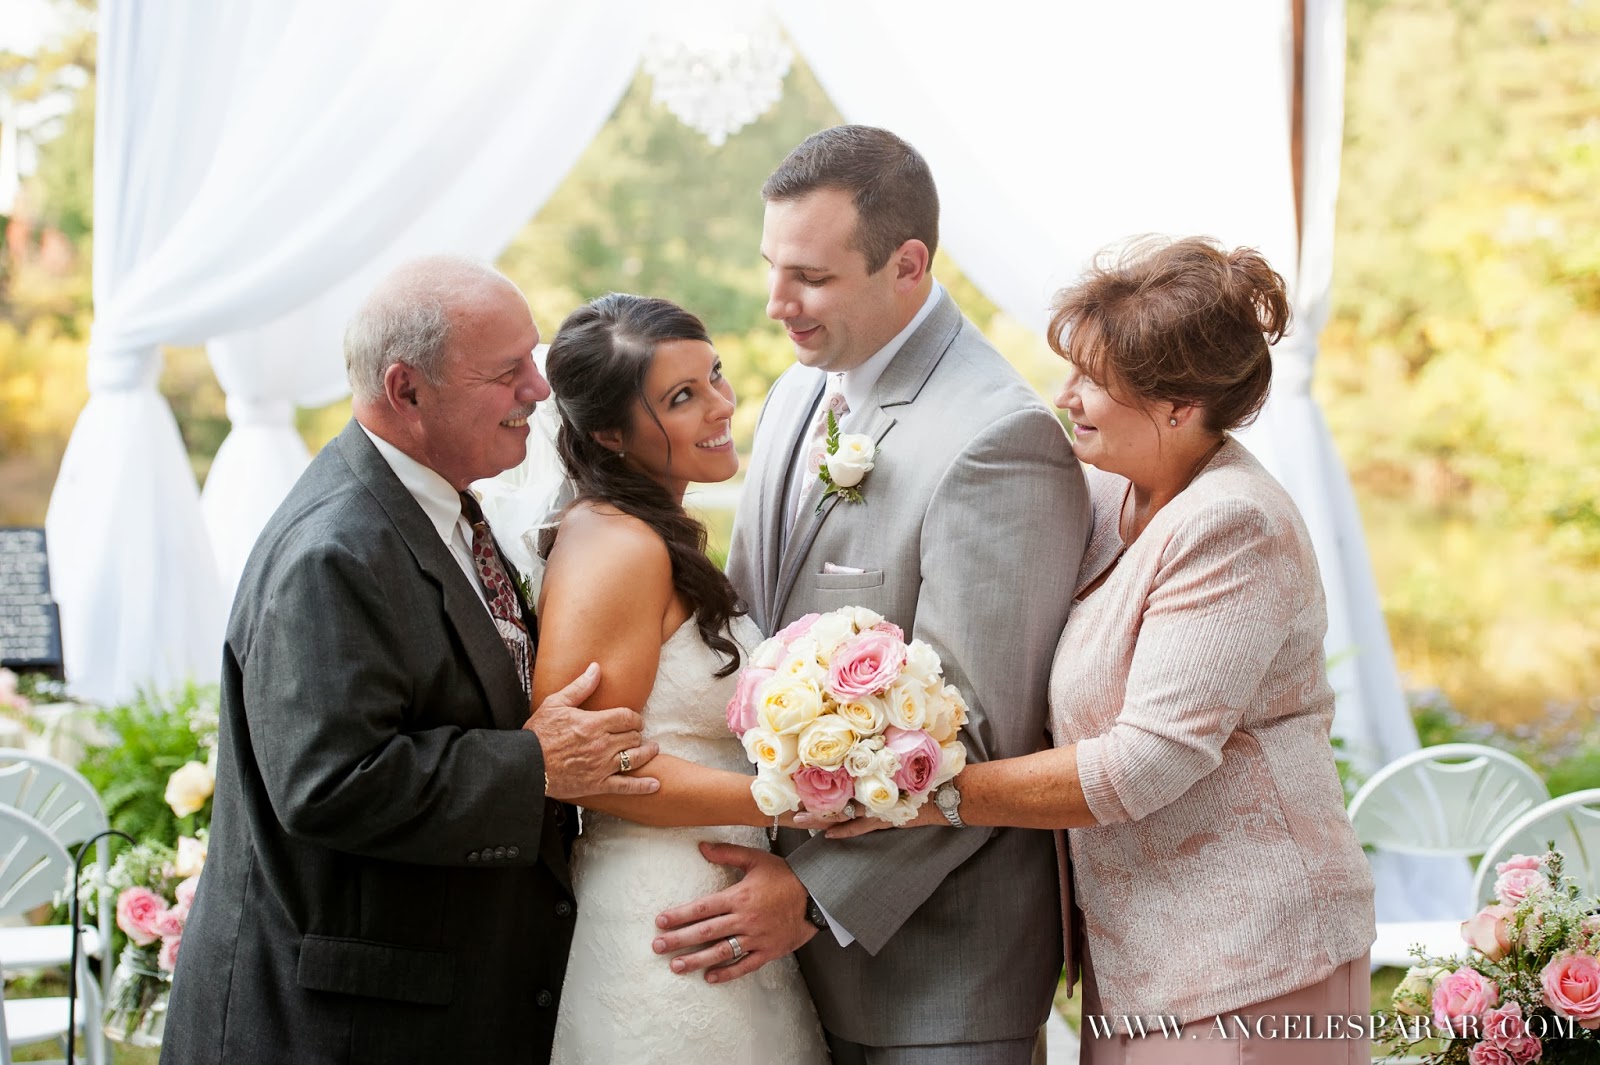 Jonathon and Paige's wedding | Vizcaya Villa Wedding Fayetteville, NC ...